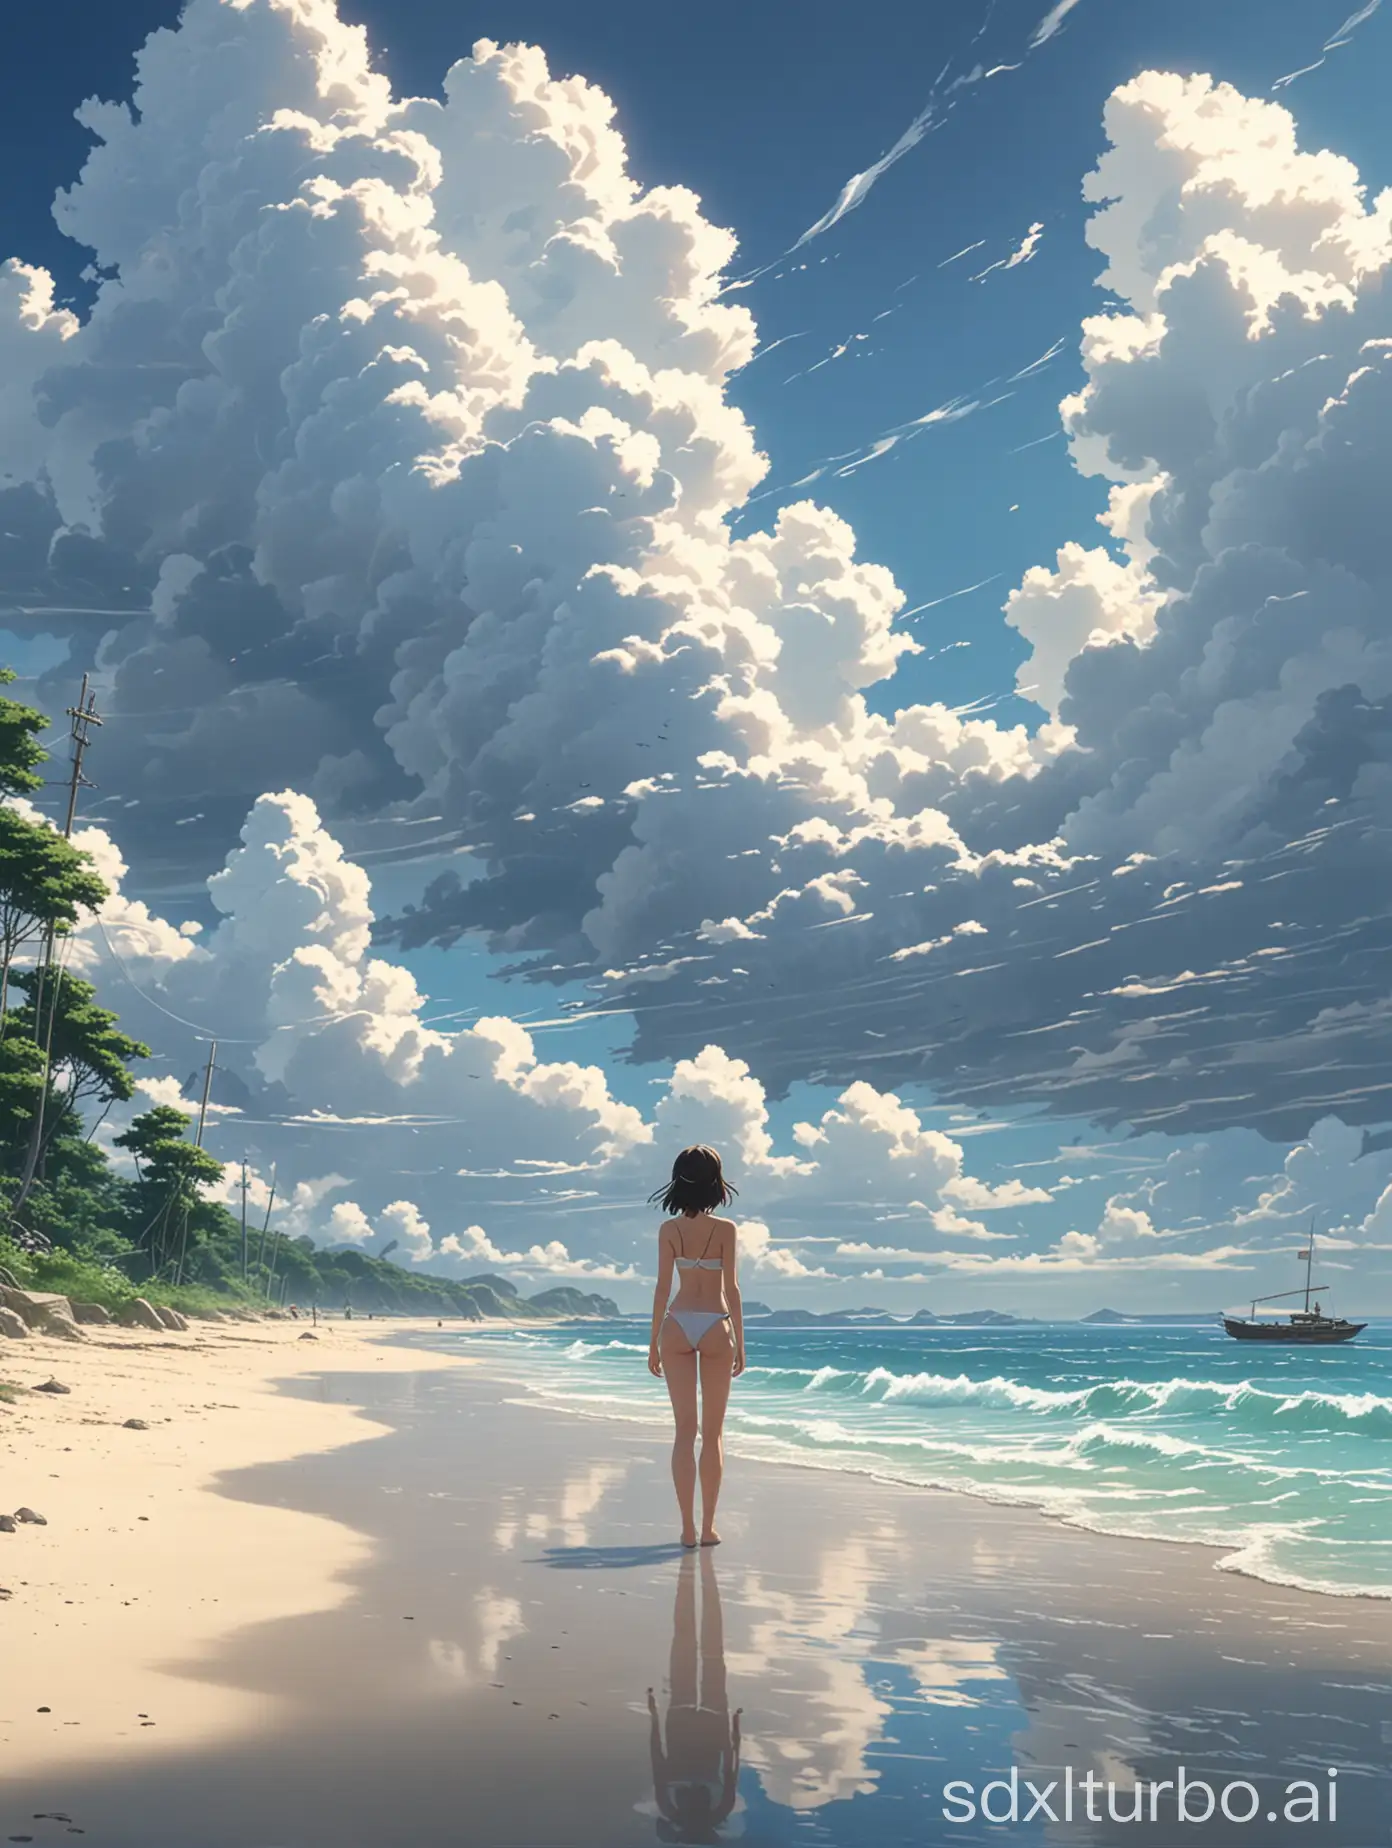 Cinematic-Anime-Scene-Girl-in-Bikini-on-Oceanshore-with-Fluffy-Clouds